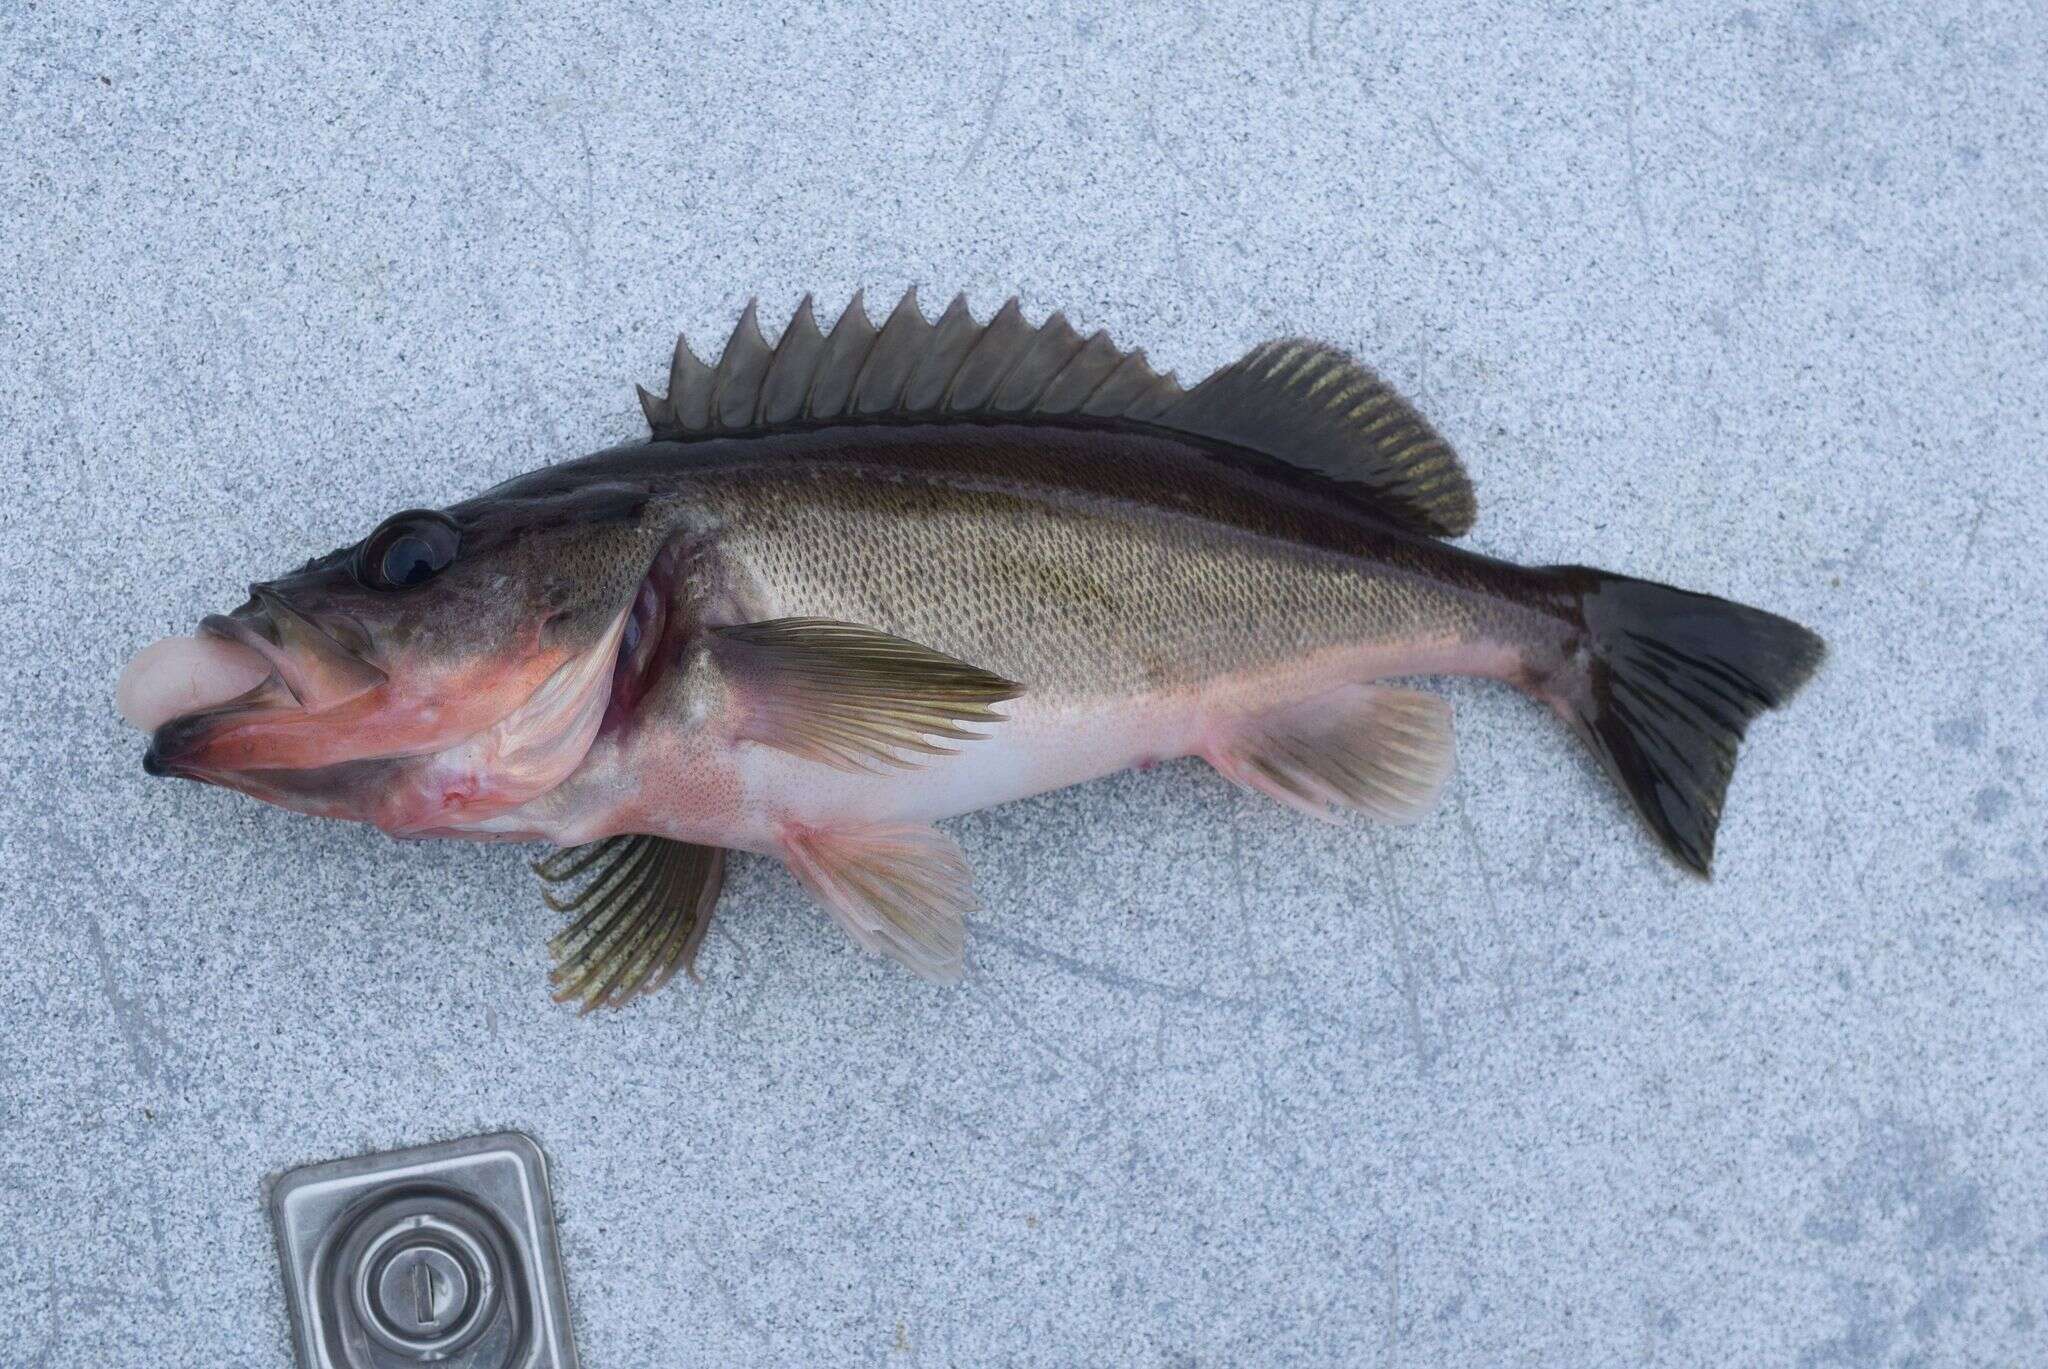 Image of Silvergray rockfish